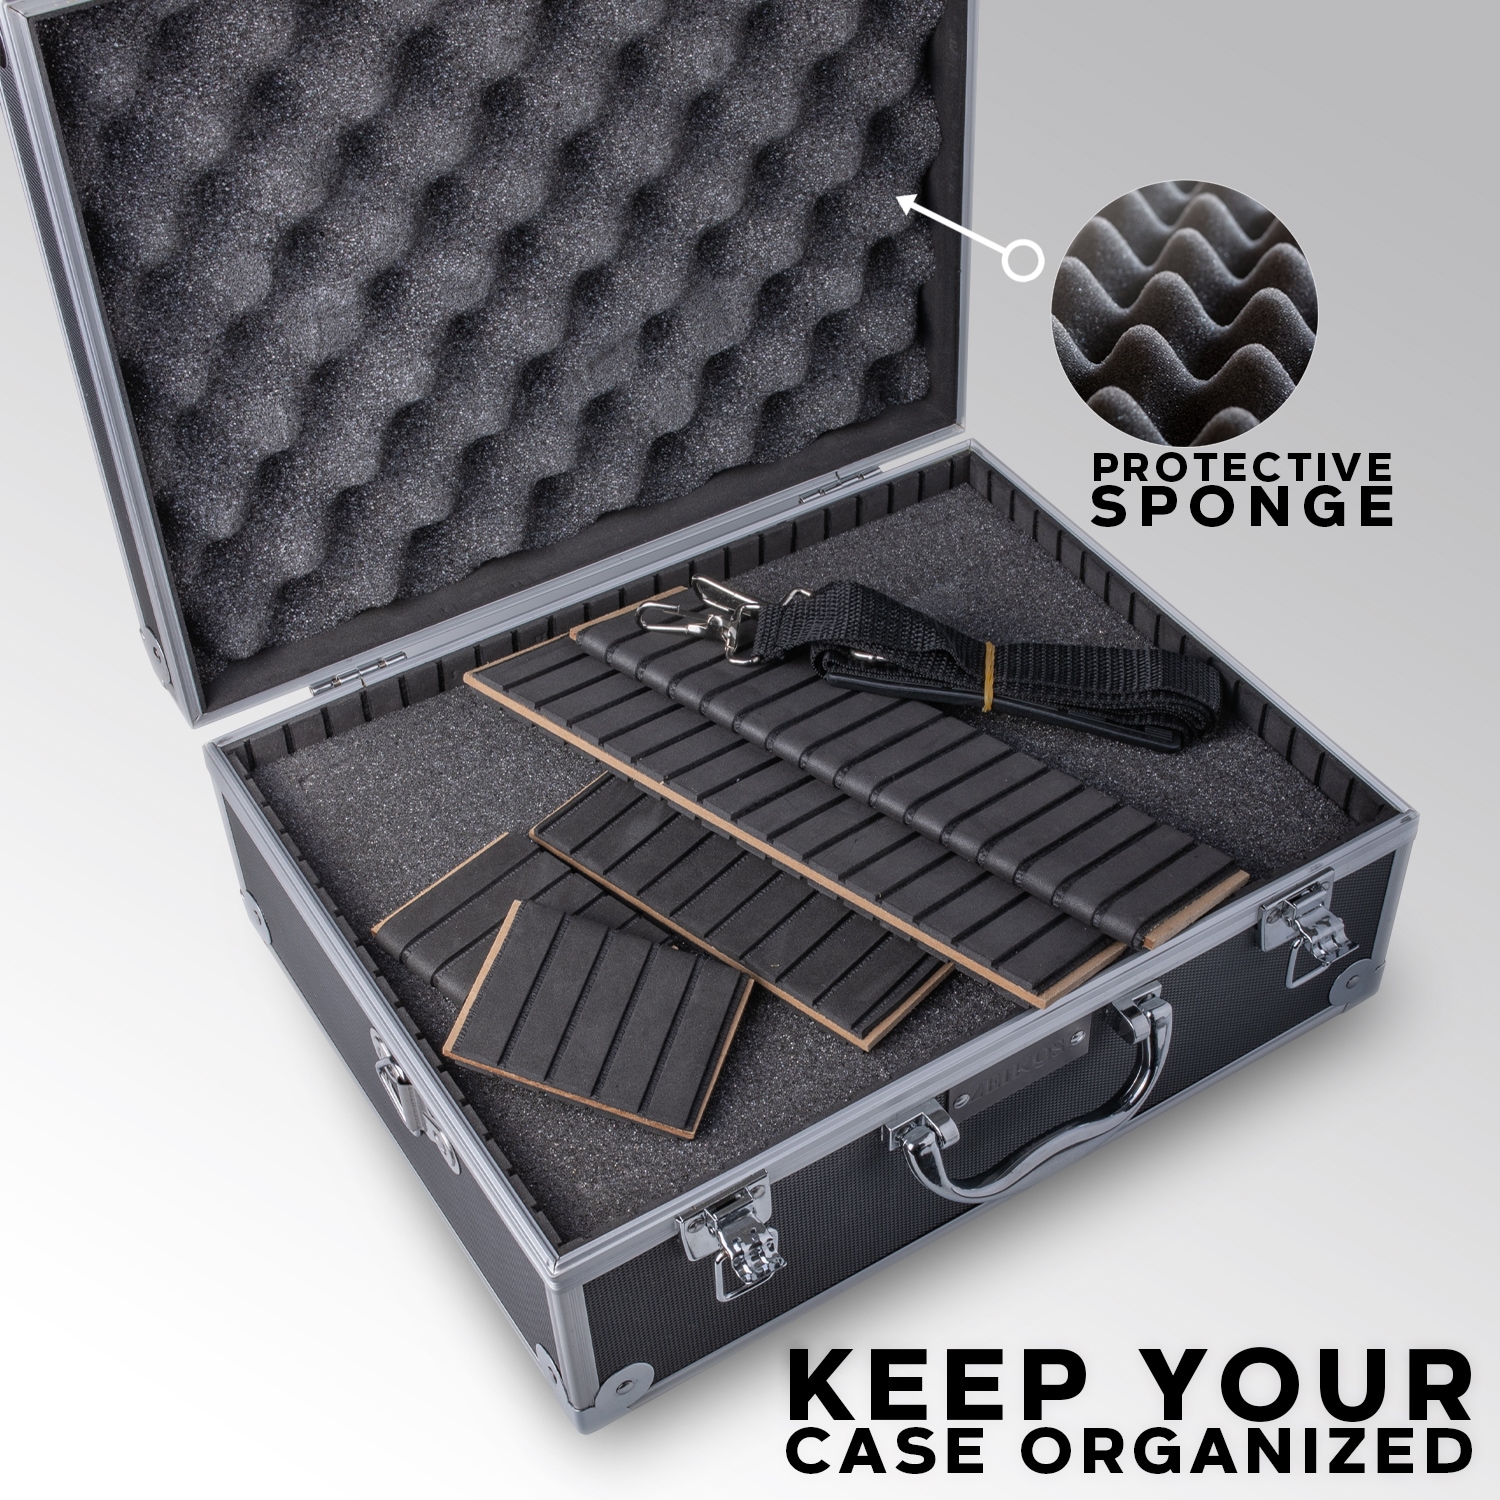 storage box 27 x 24.6 x 12.4 cm Black Equipment Photography Waterproof with Foam Flight Case Transport Hard Case Galapara Technicians Tool Box